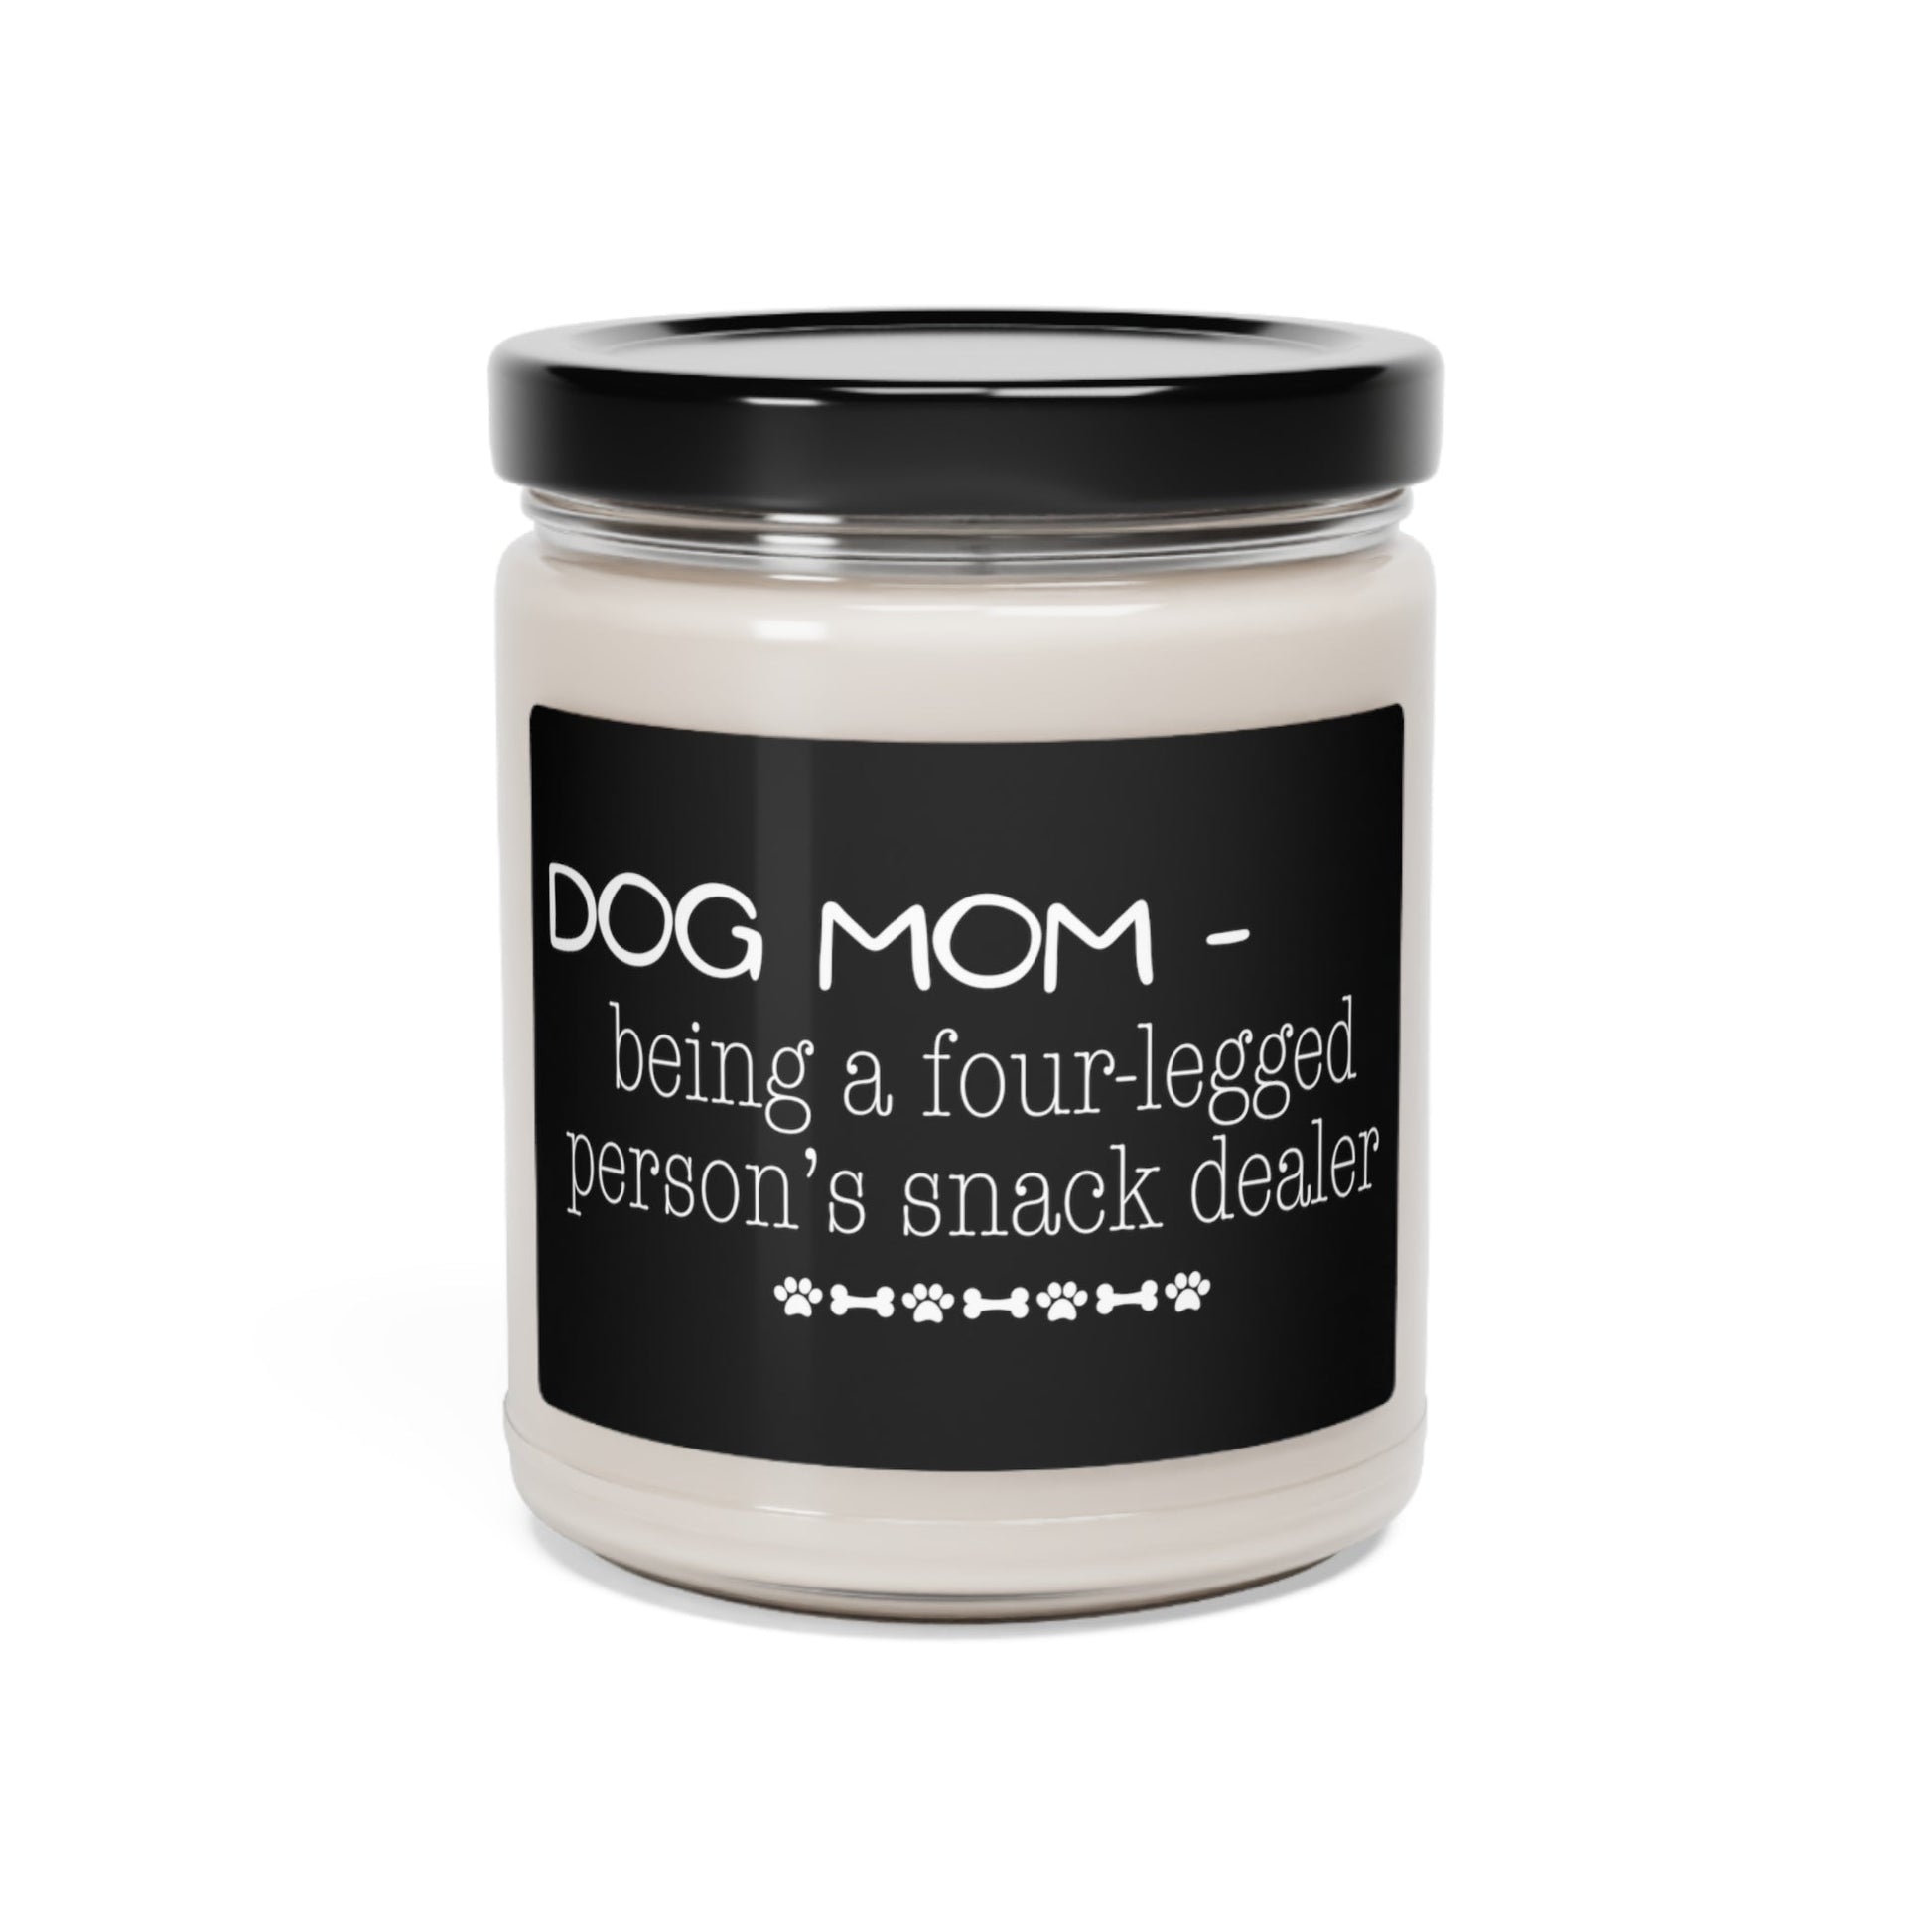 Dog Mom Definition Candle - Cinnamon Vanilla / 9oz Home